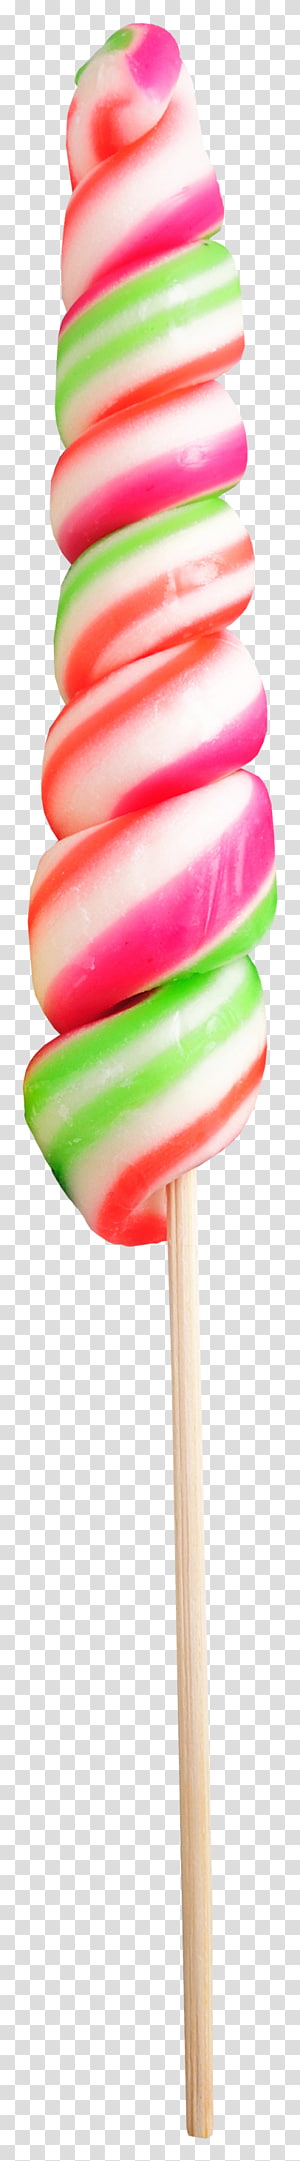 lollipop clipart swirled